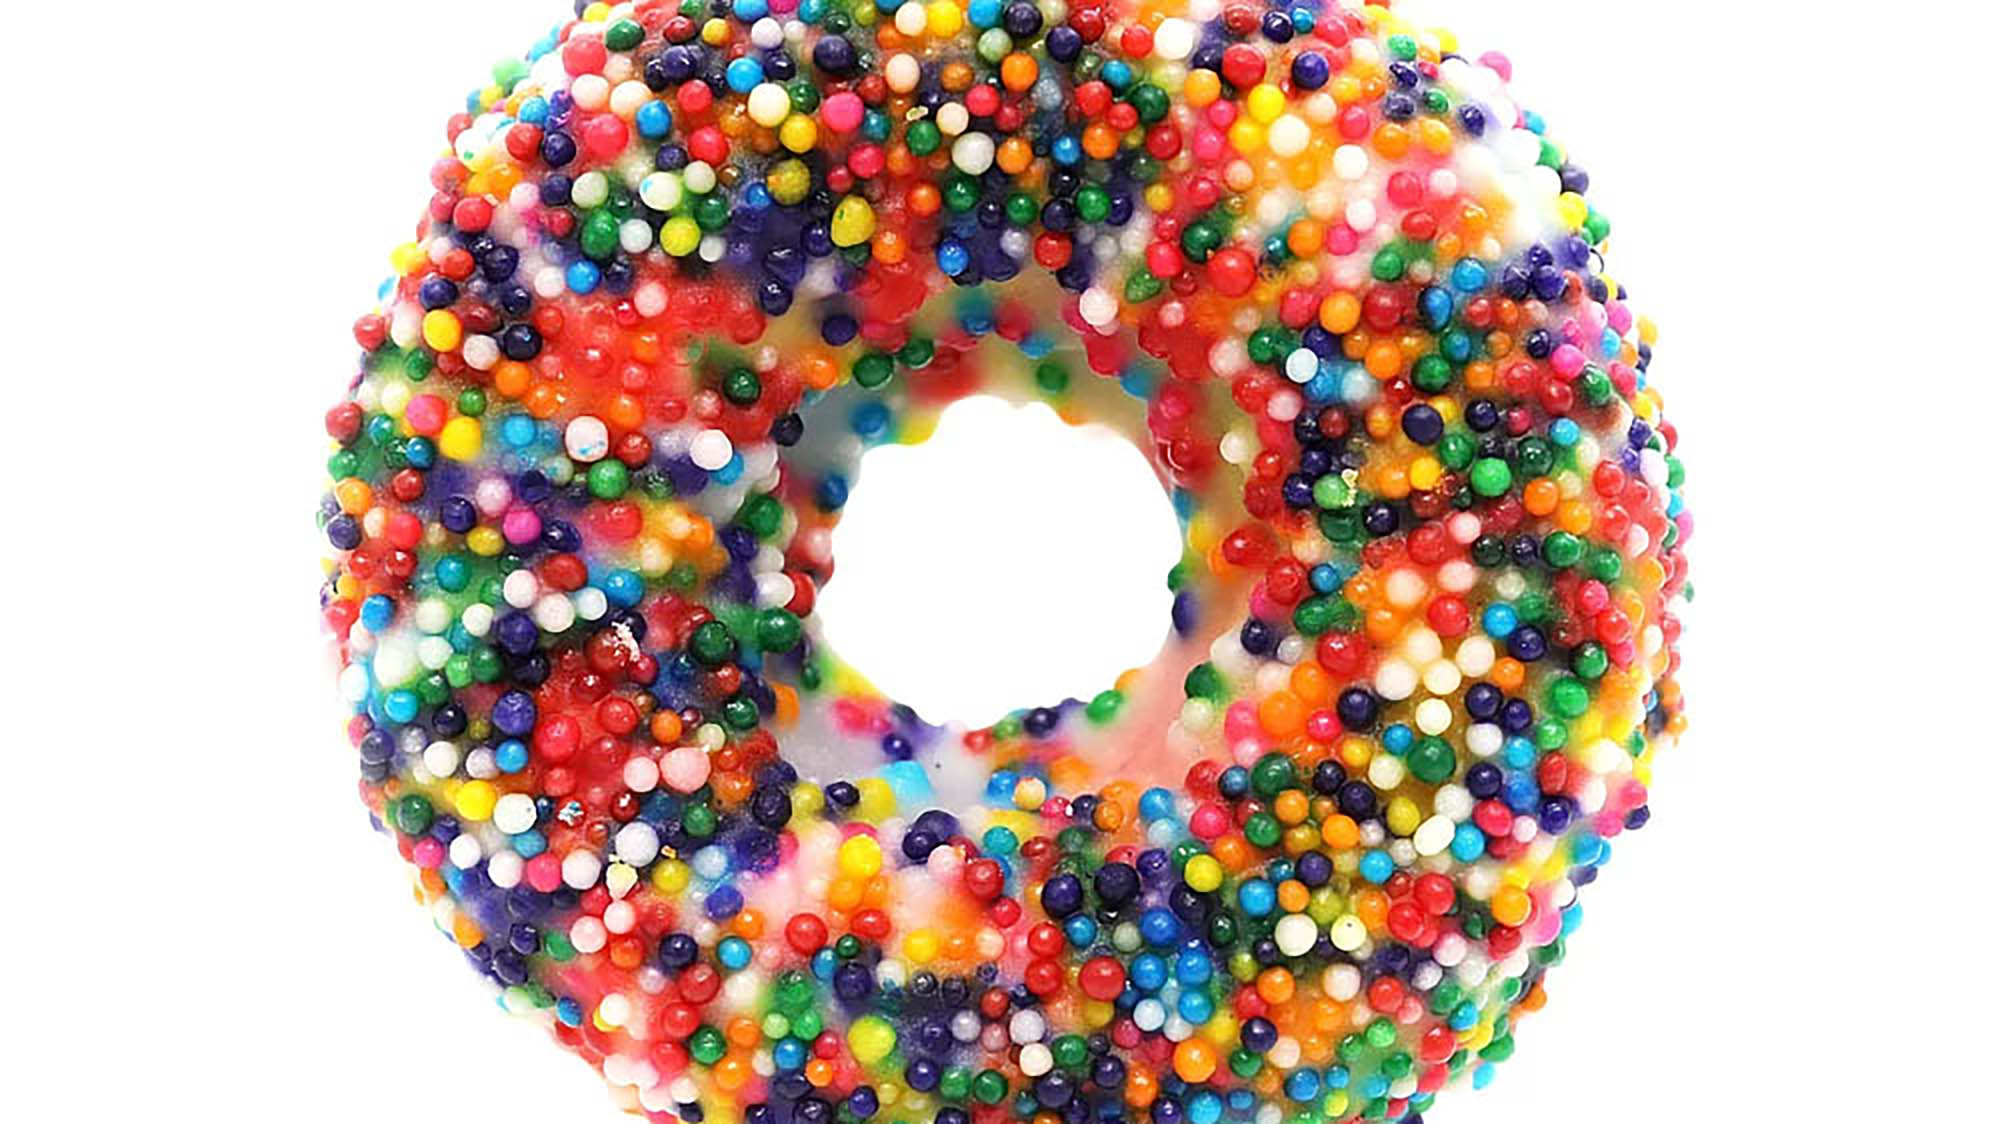 Donut with round rainbow sprinkles and white glaze